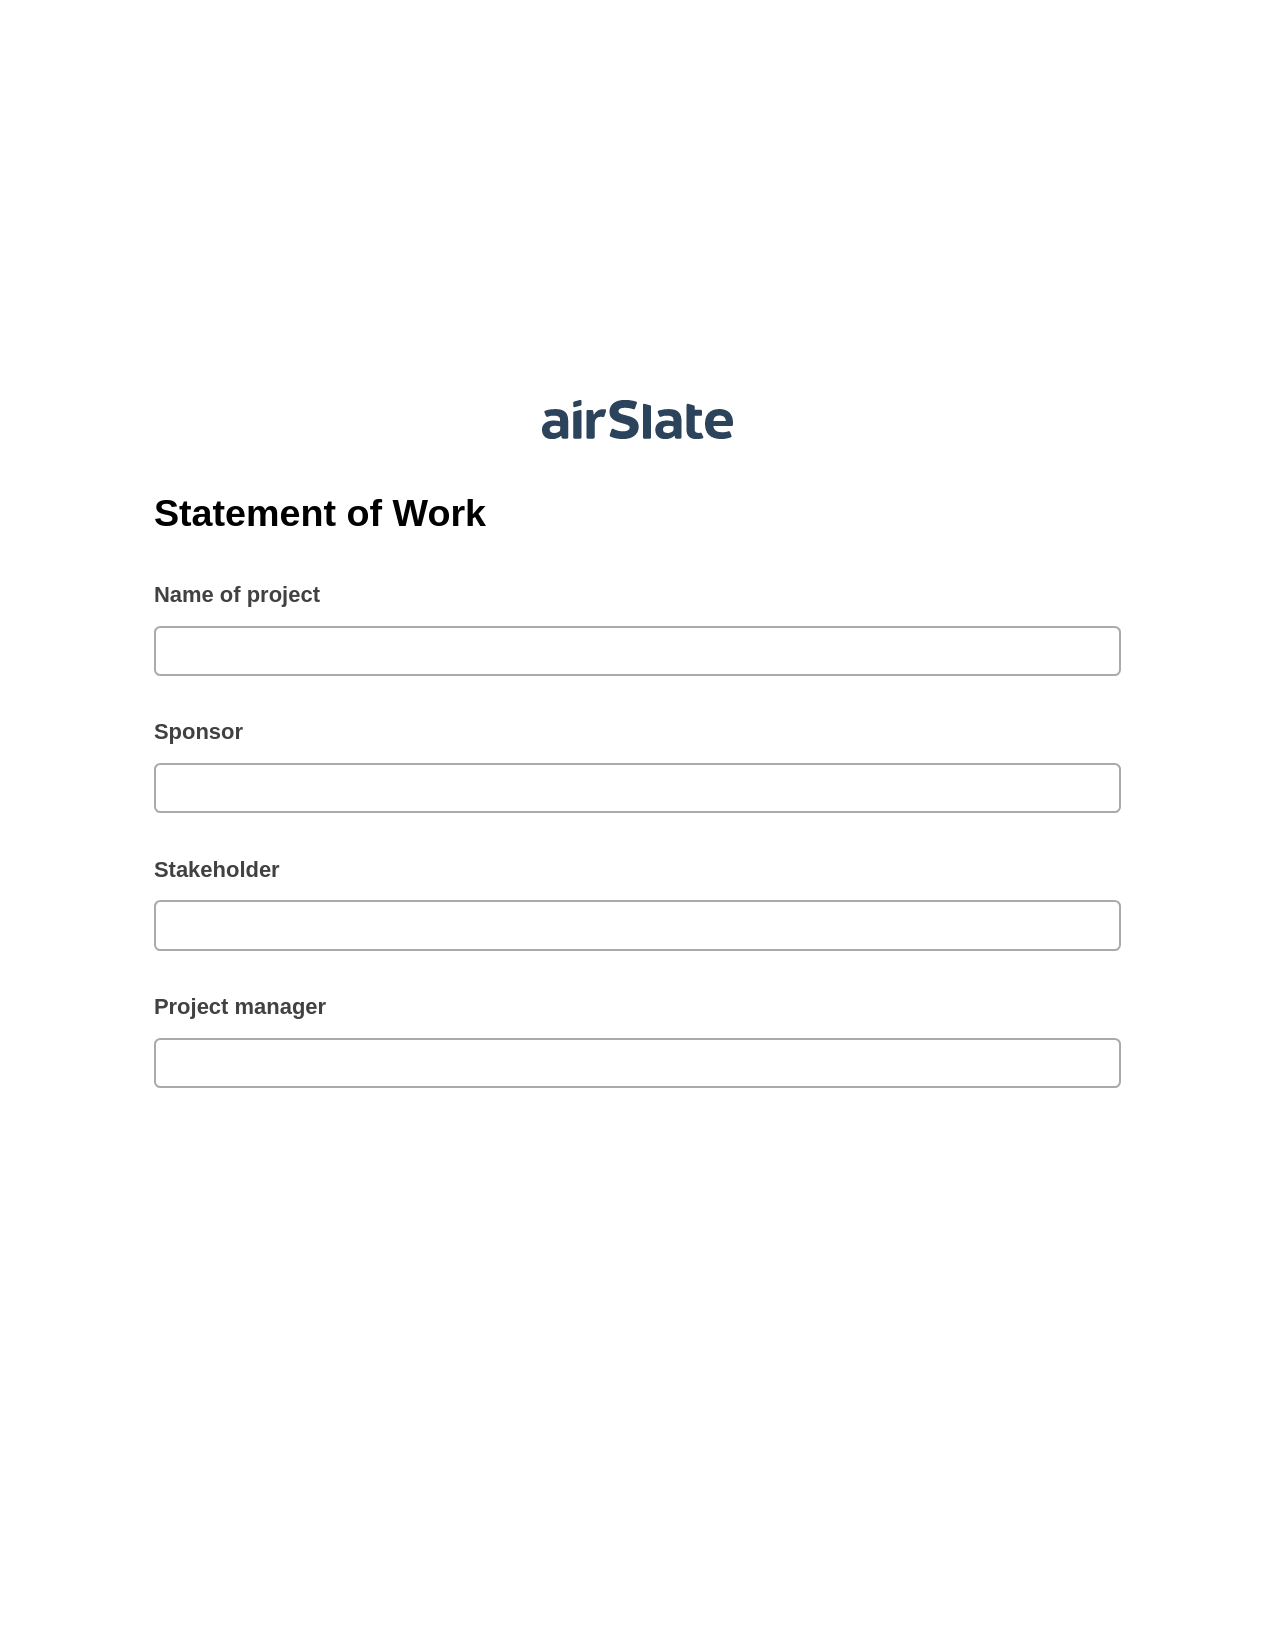 Multirole Statement of Work Pre-fill from Excel Spreadsheet Bot, Create slate bot, OneDrive Bot